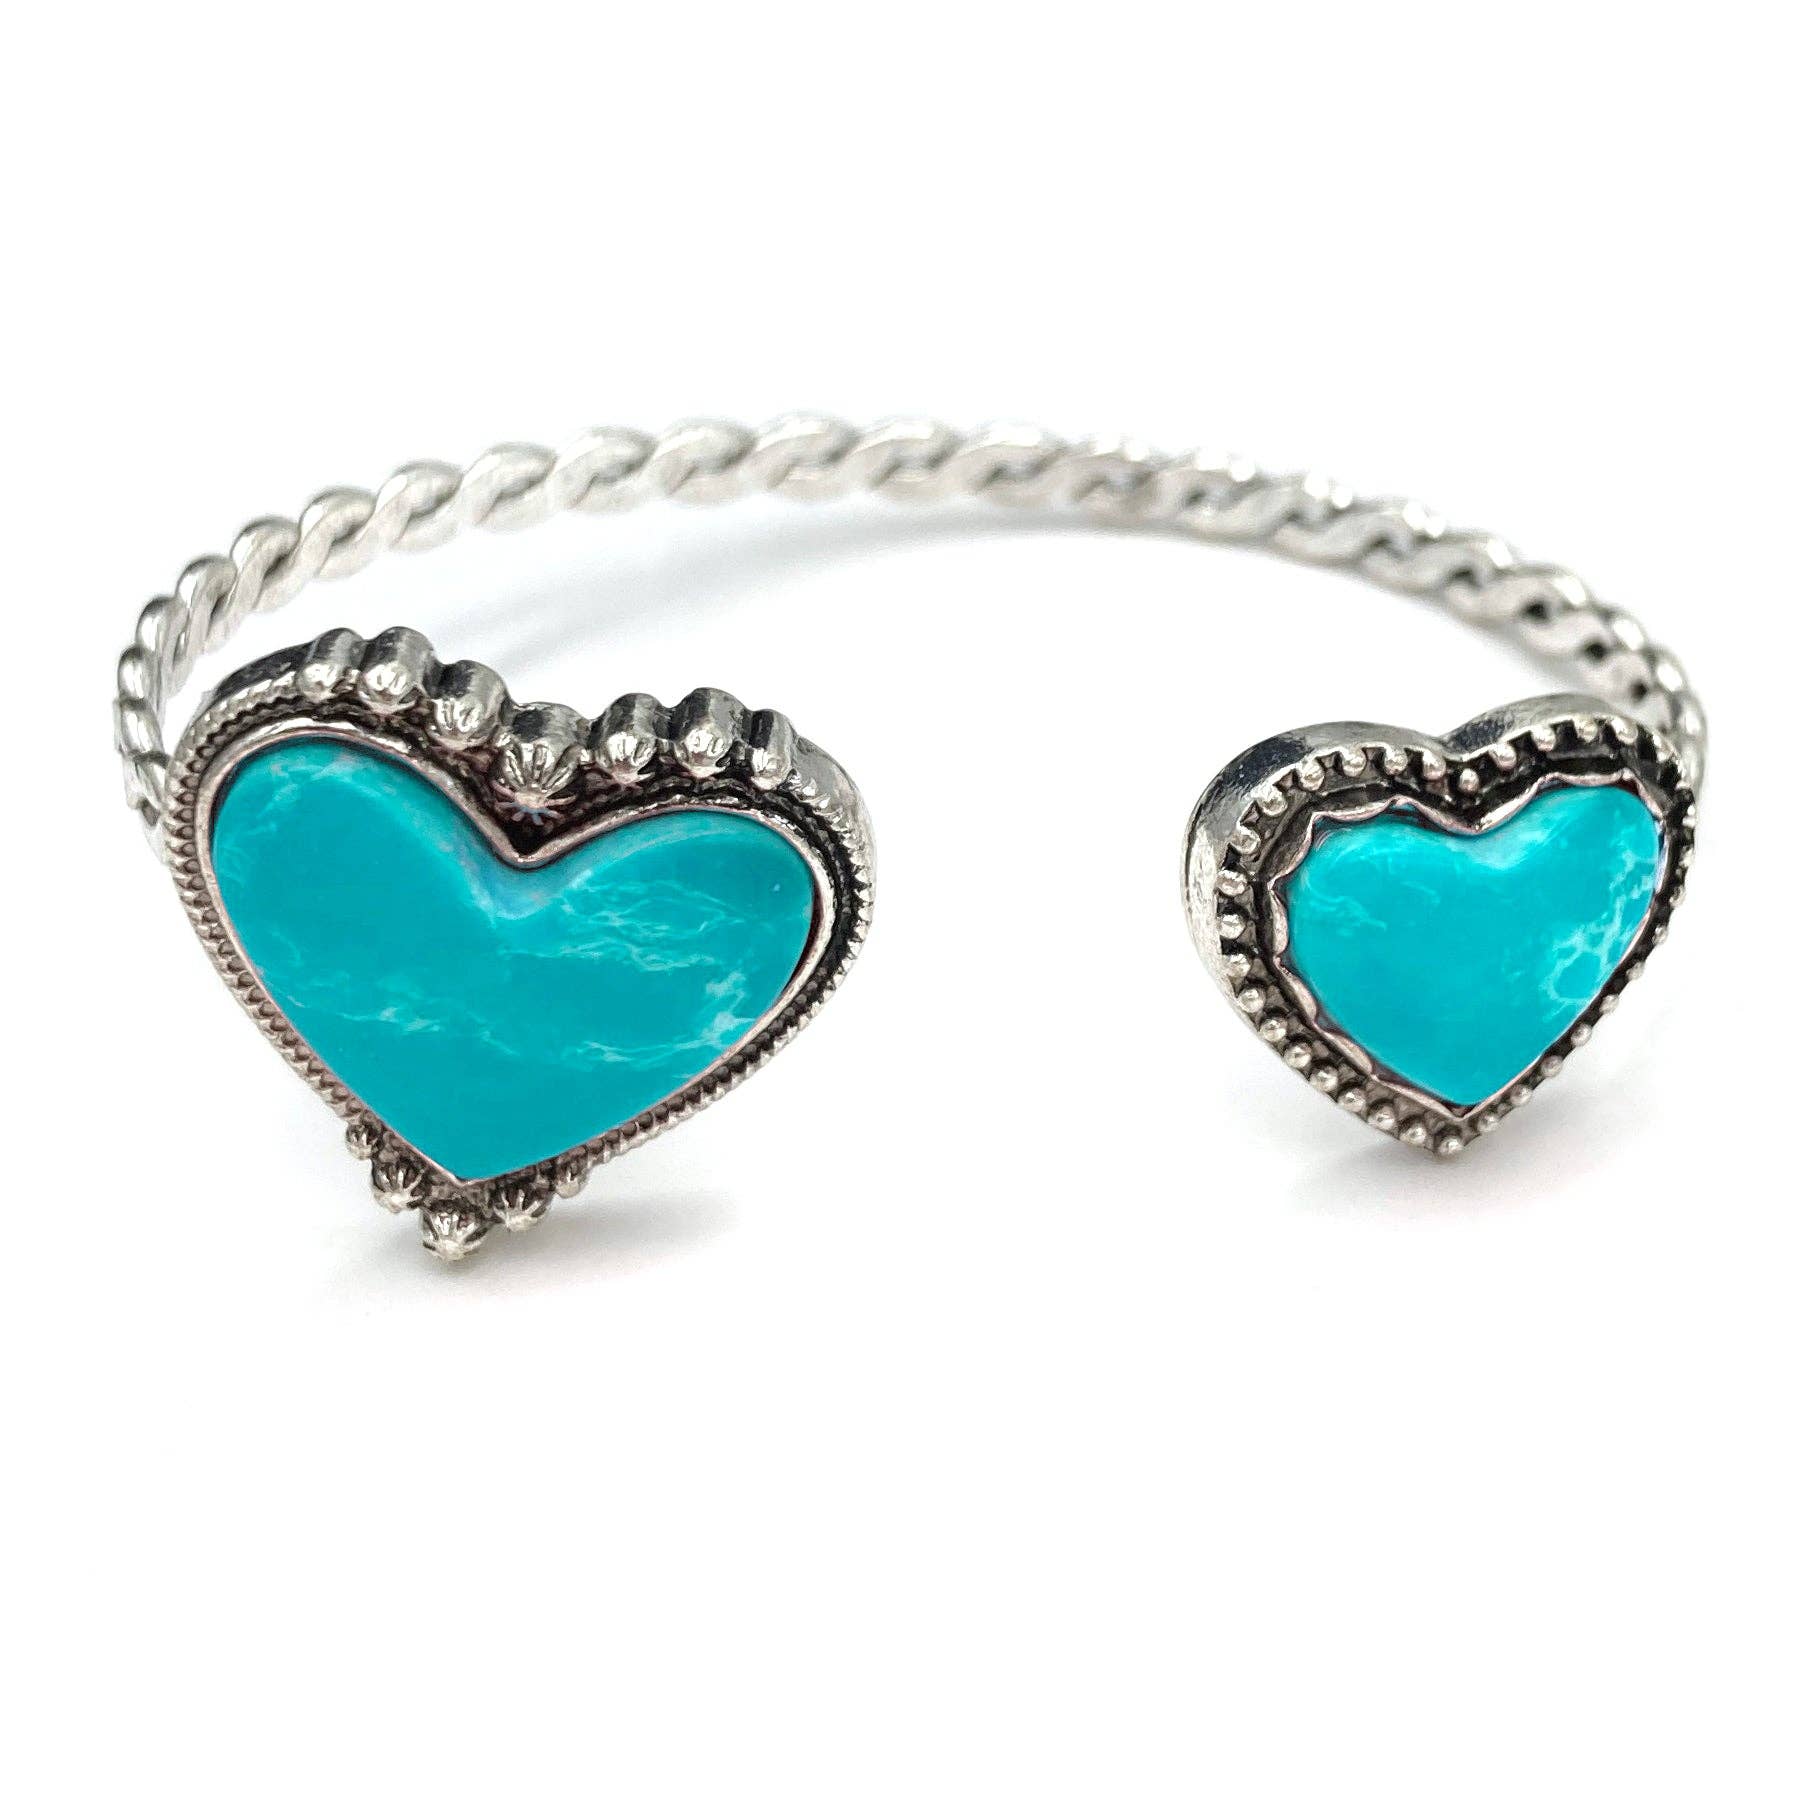 Turquoise Heart Open Bangle Bracelet